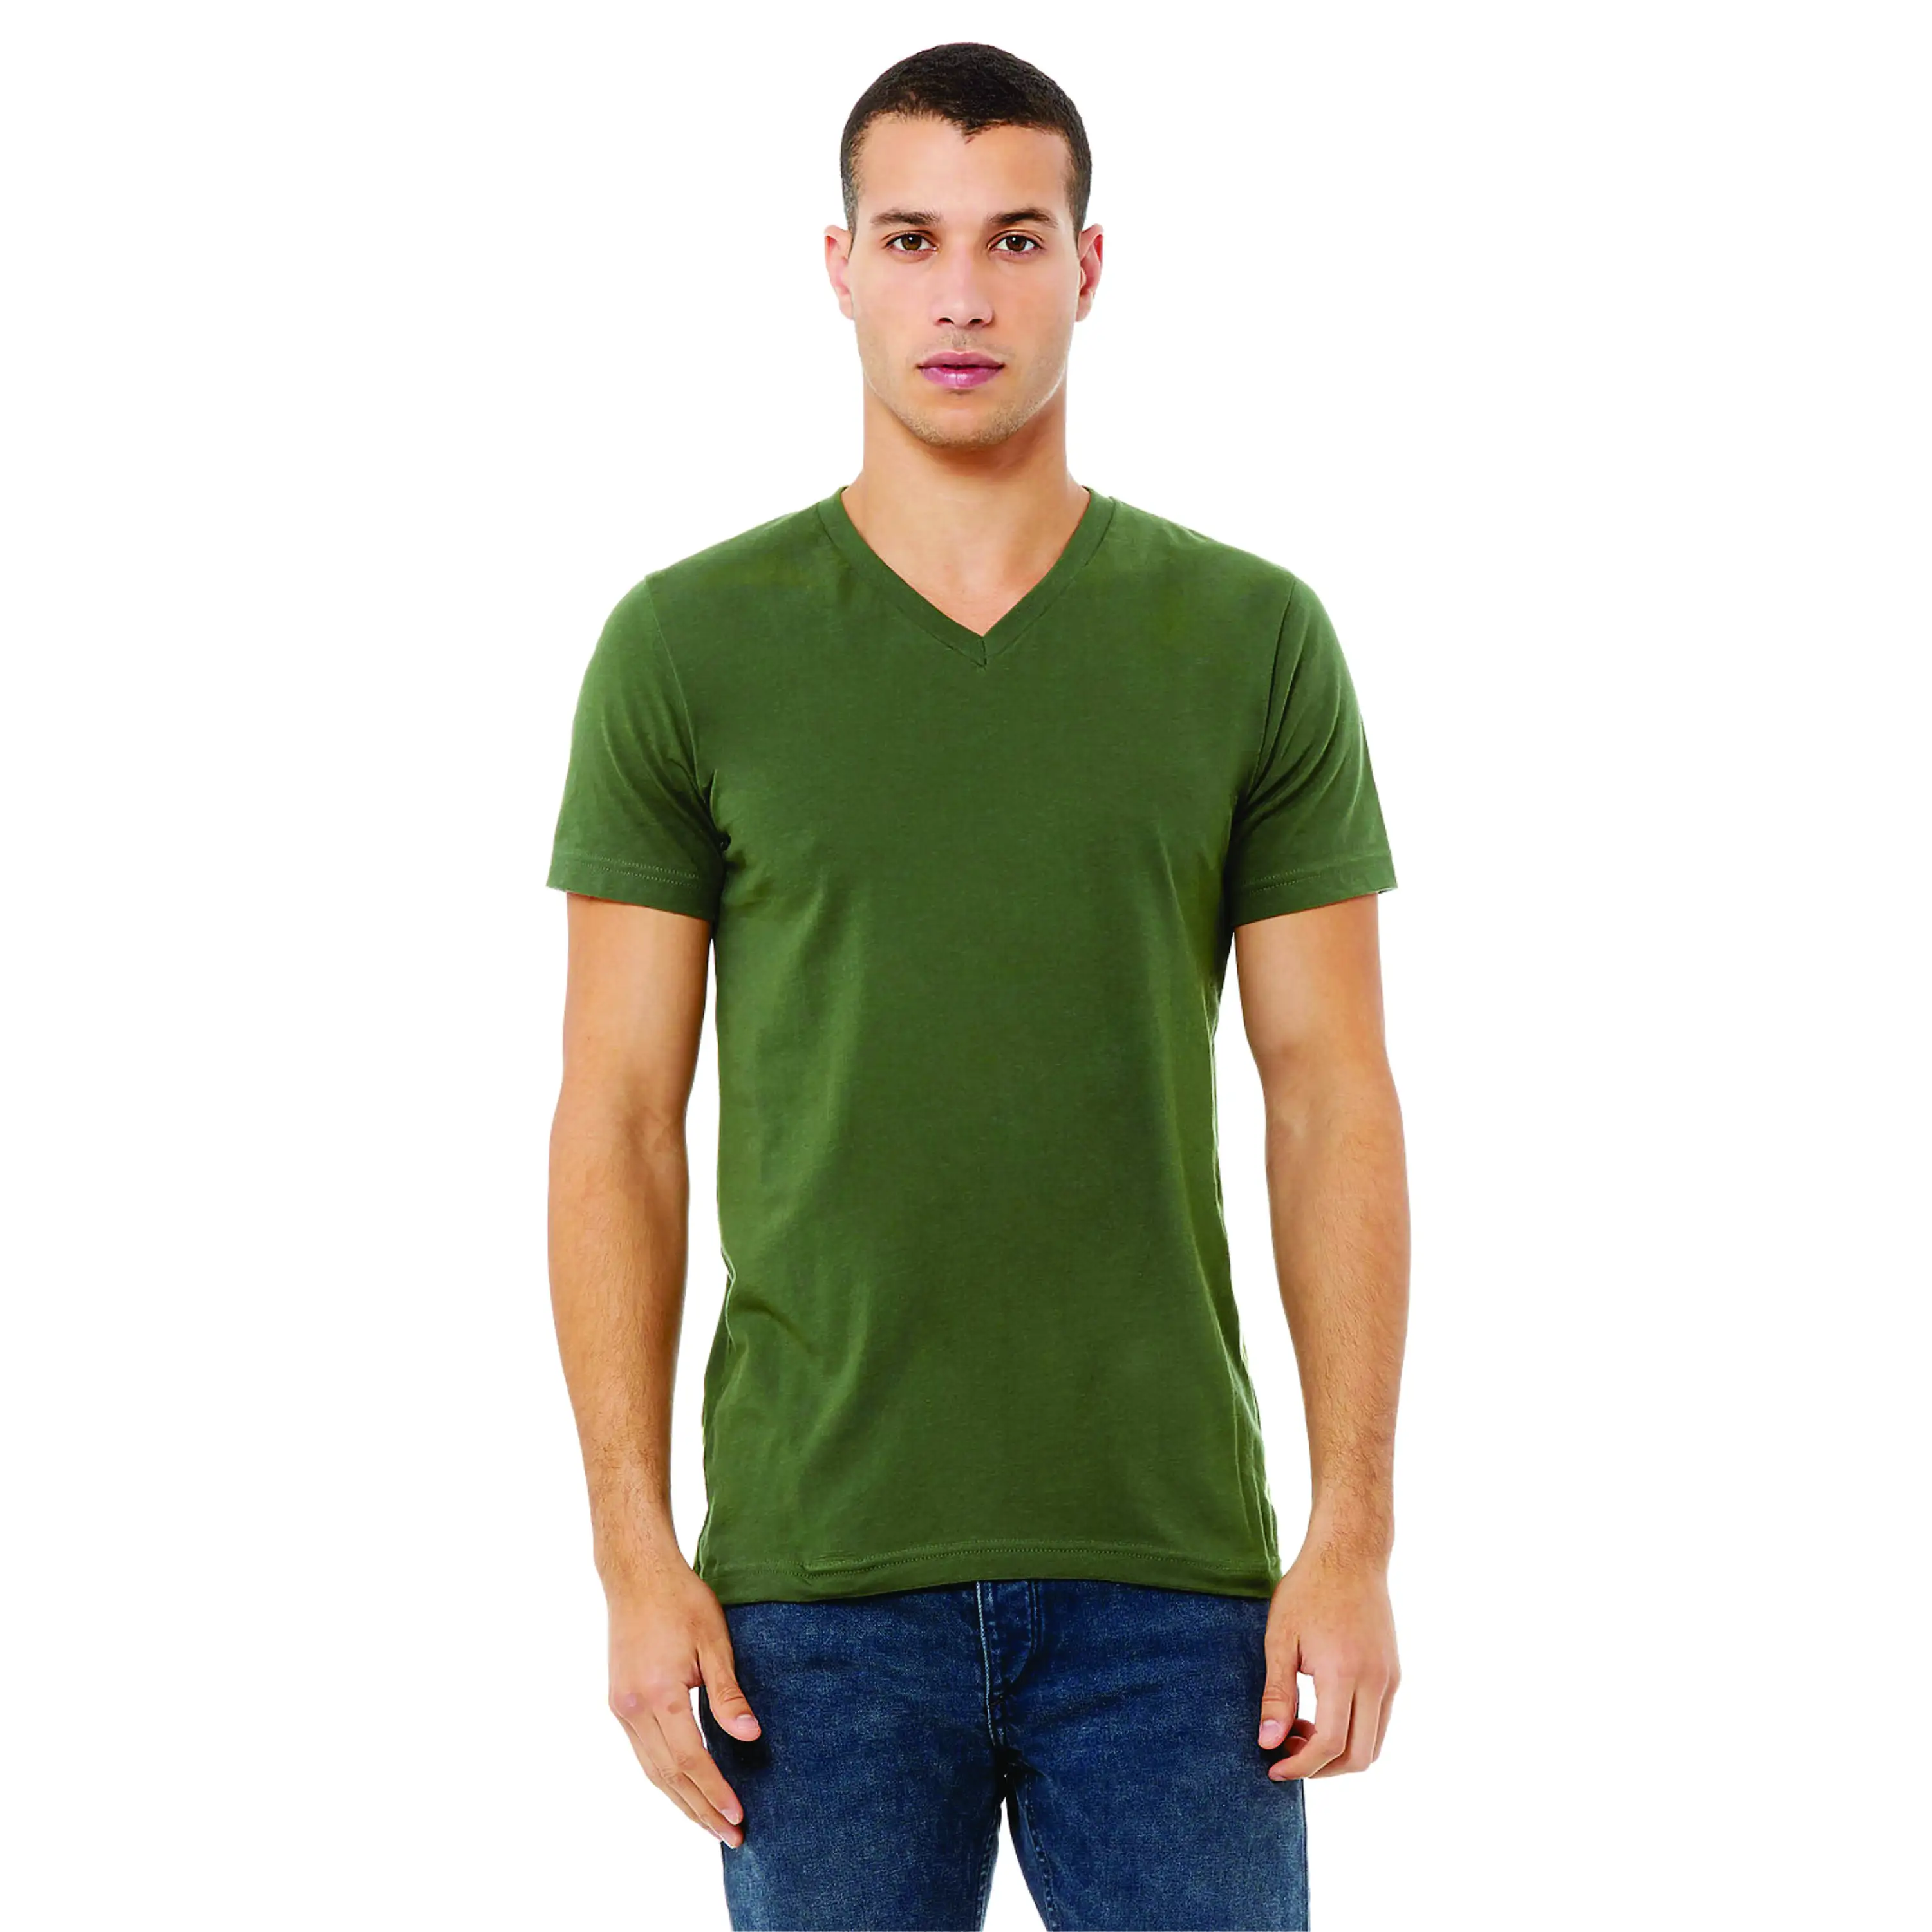 Camiseta militar verde unisex con cuello en V-100% algodón, 4,2 oz, manga corta